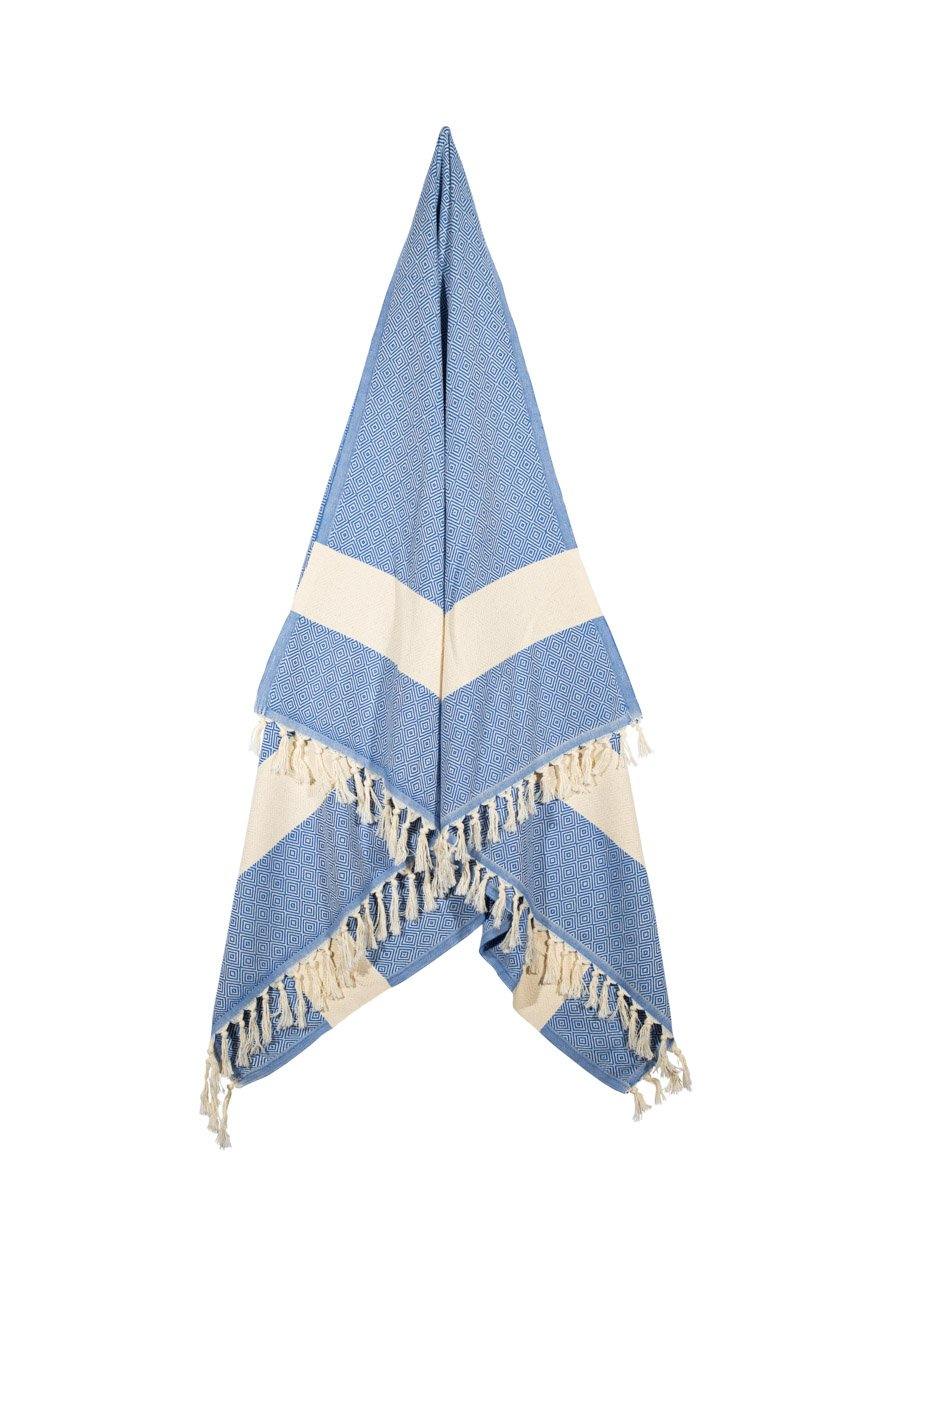 Diamond - Blue and Natural Hanging Towel